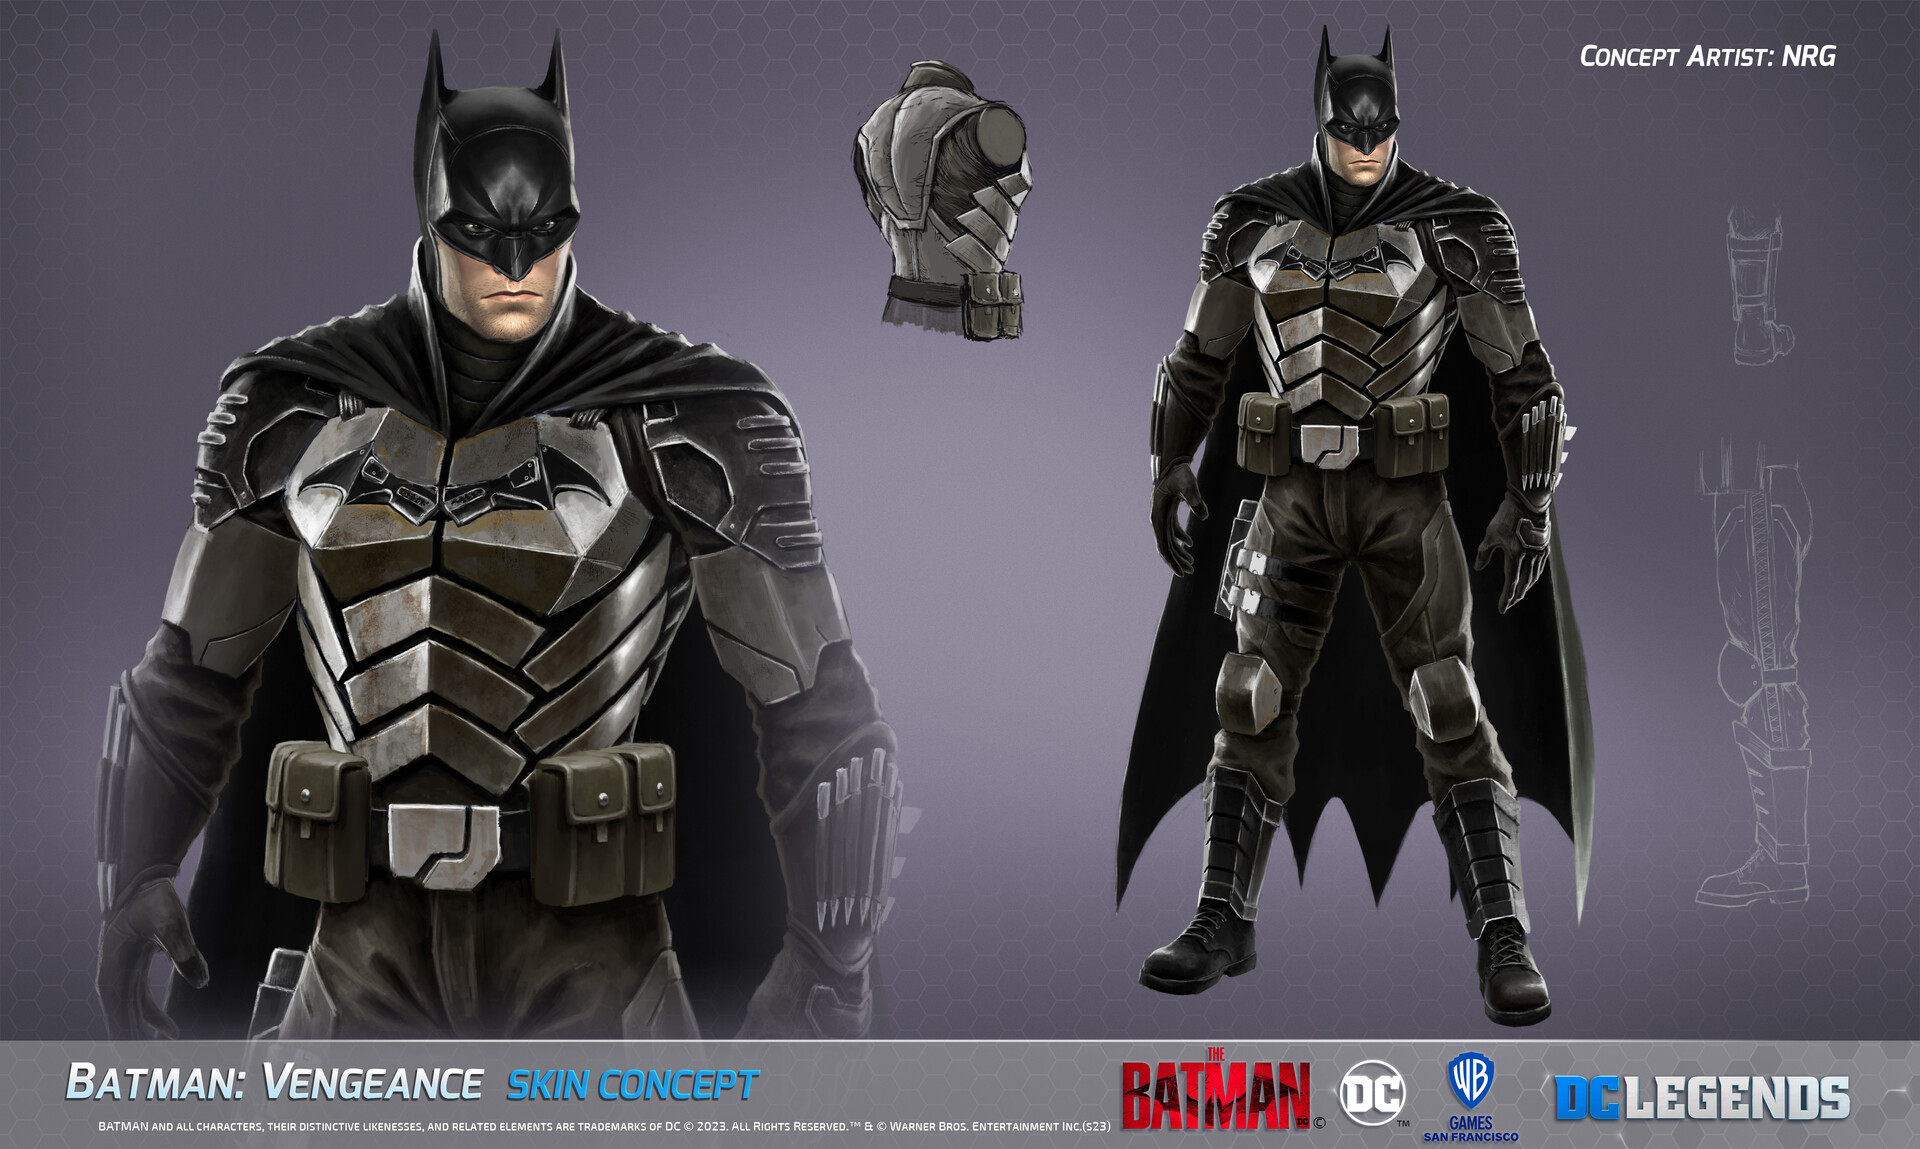 ArtStation - DC Legends Batman Vengeance skin concept by NRG